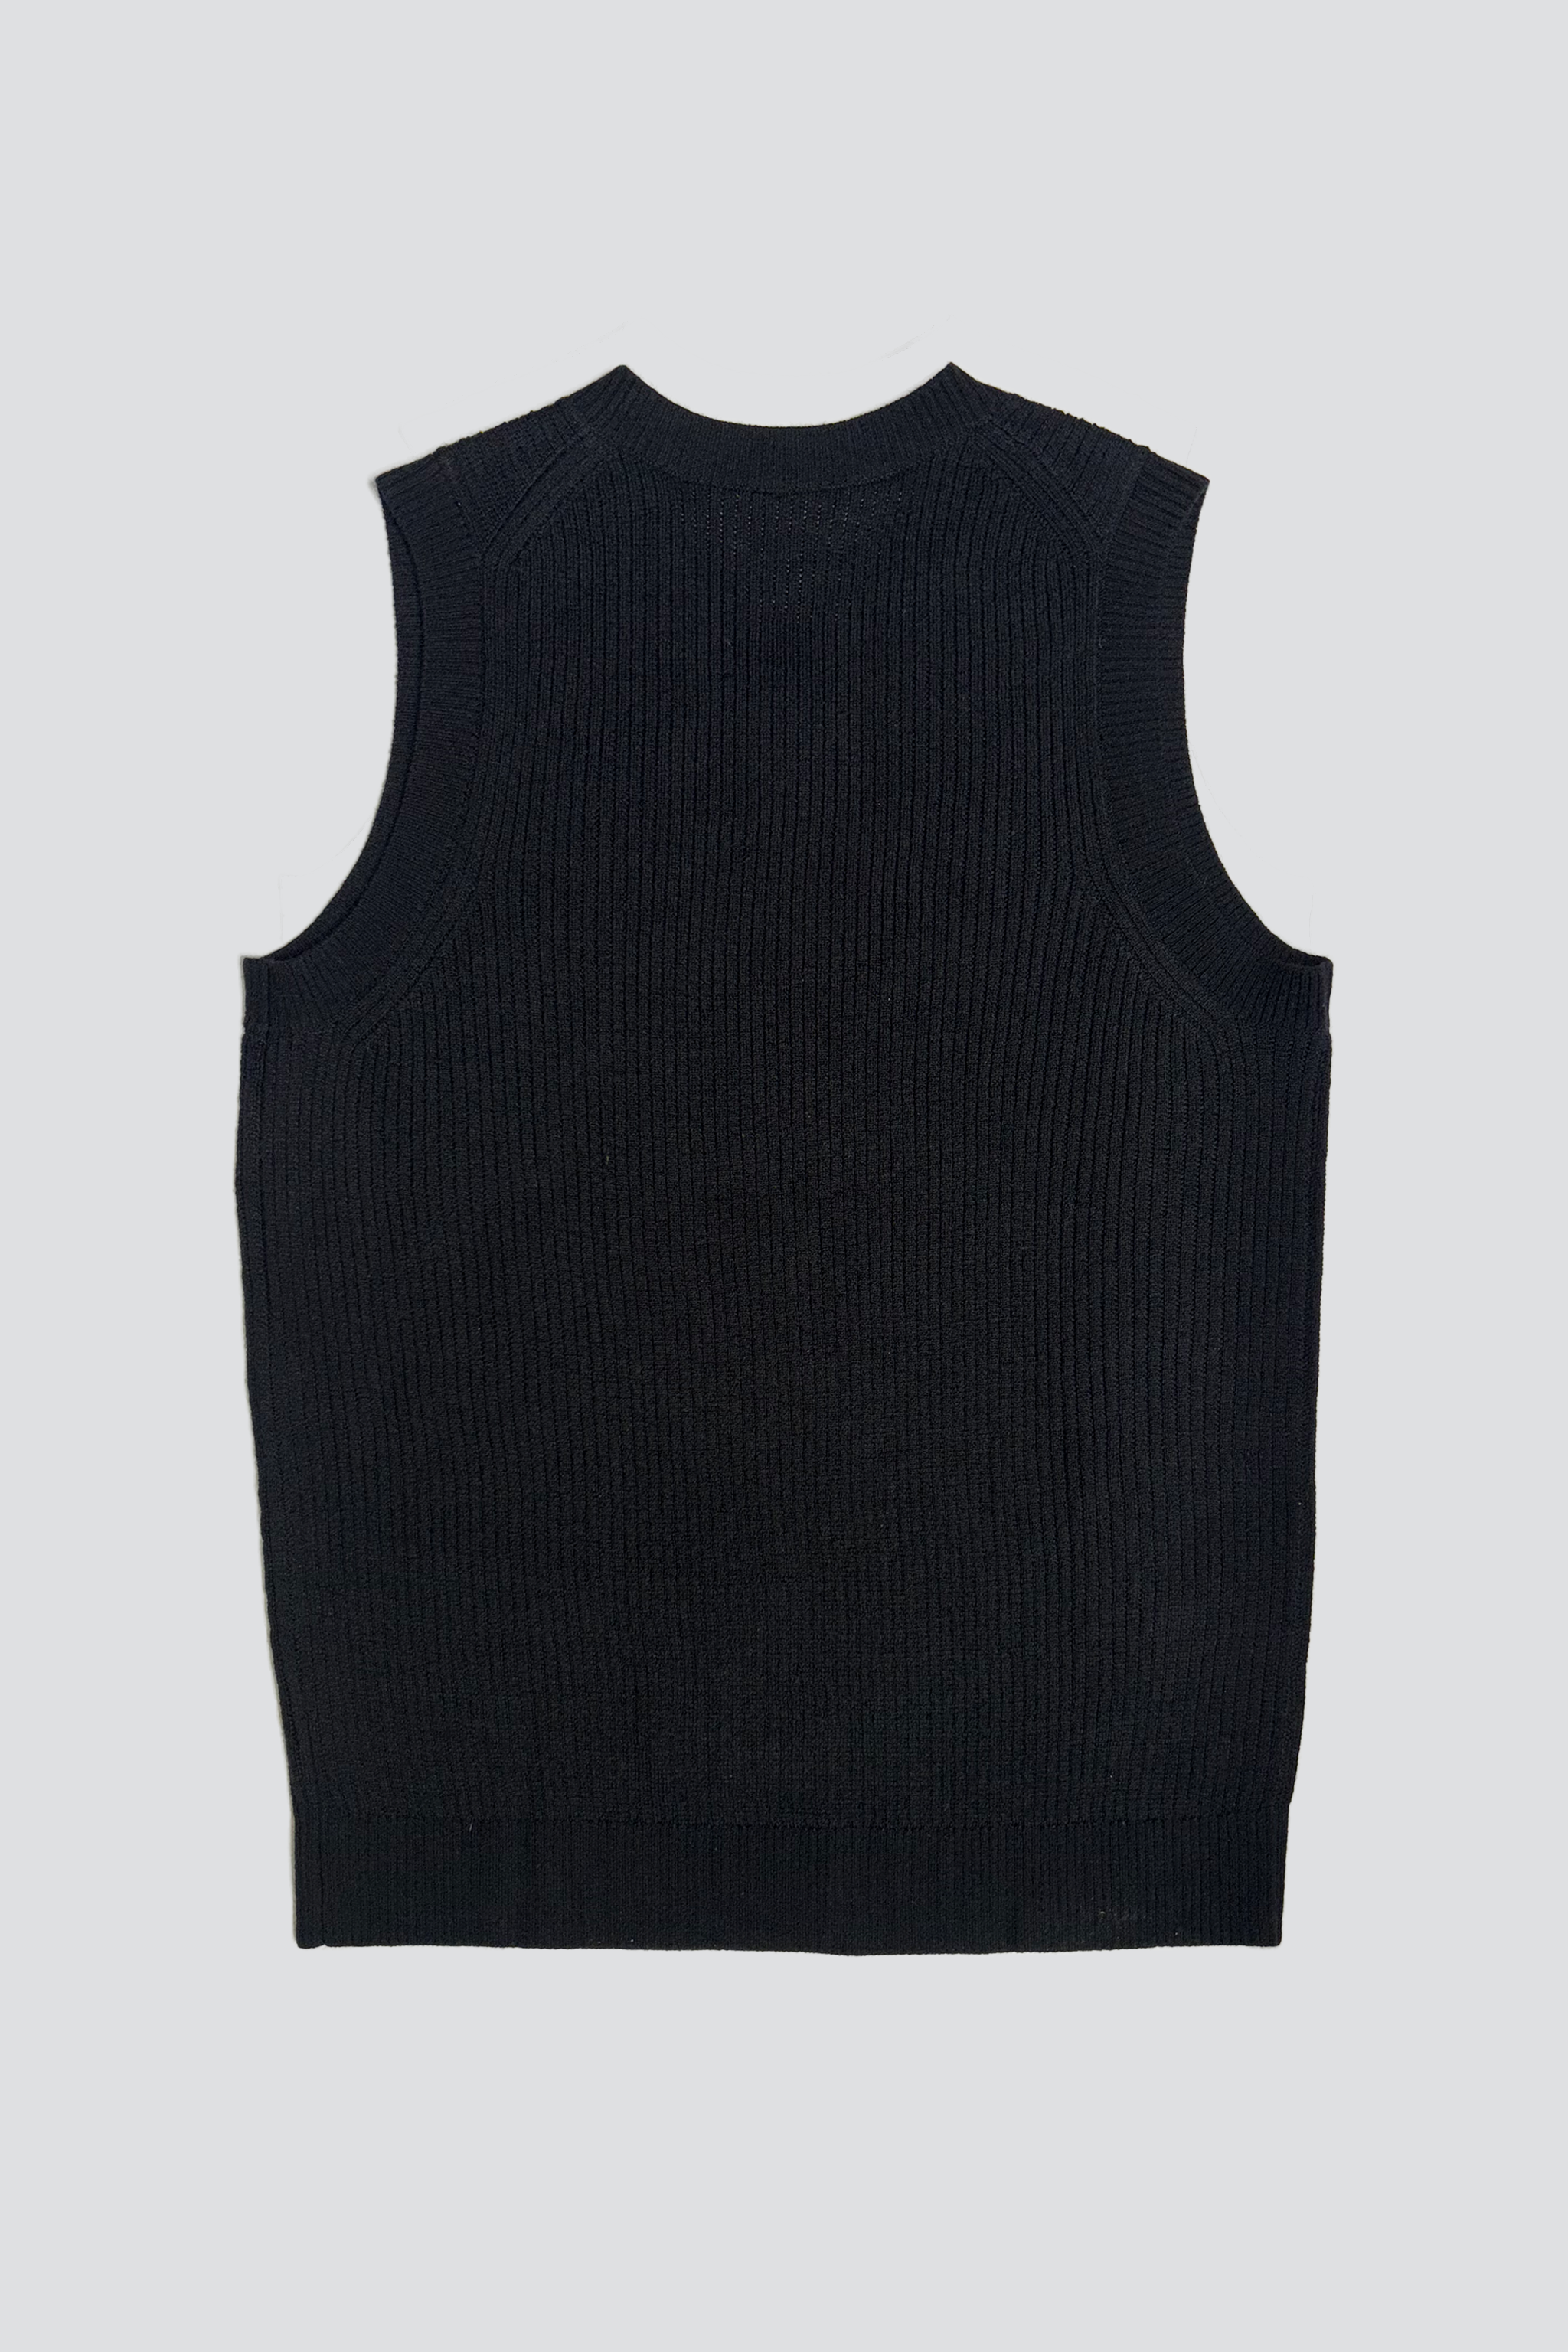 Black Ribbed Merino Wool Vest